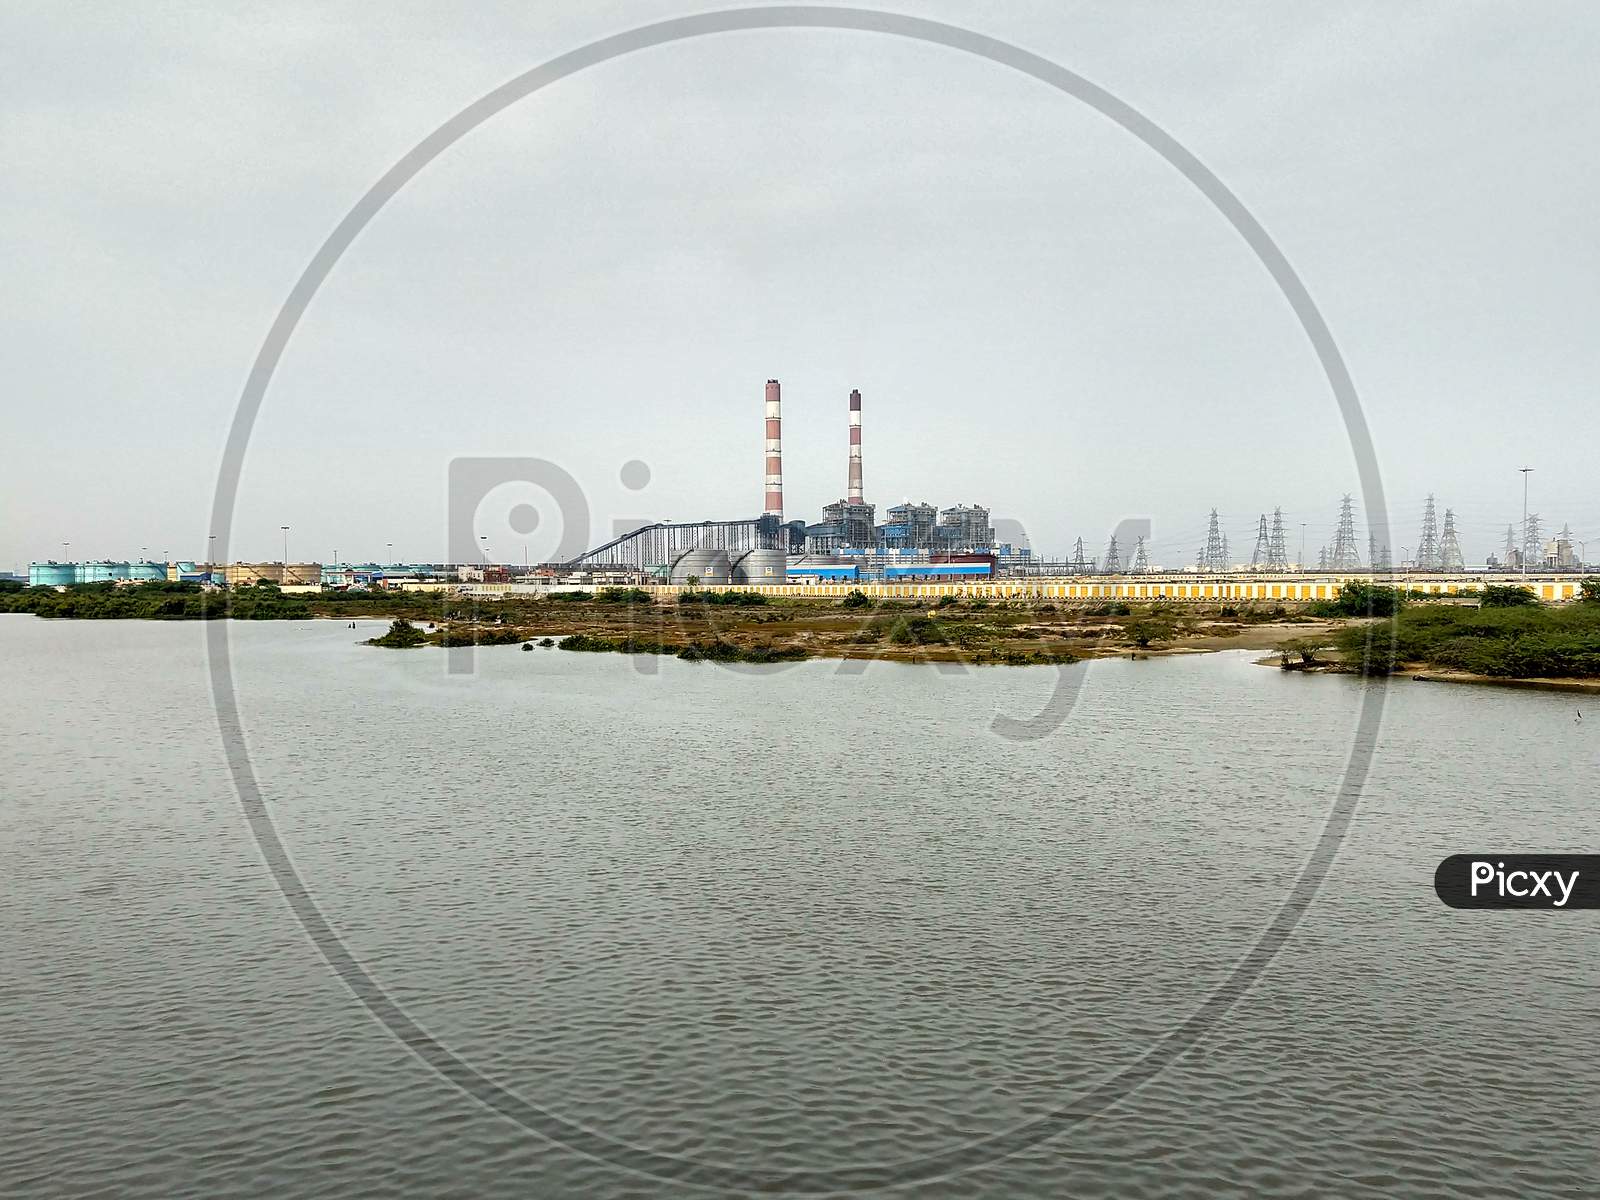 A Large Thermal Power Plant On The Banks Of The Kosasthalaiyar River At Chennai. Two Long Chimneys Are Clearly Visible.